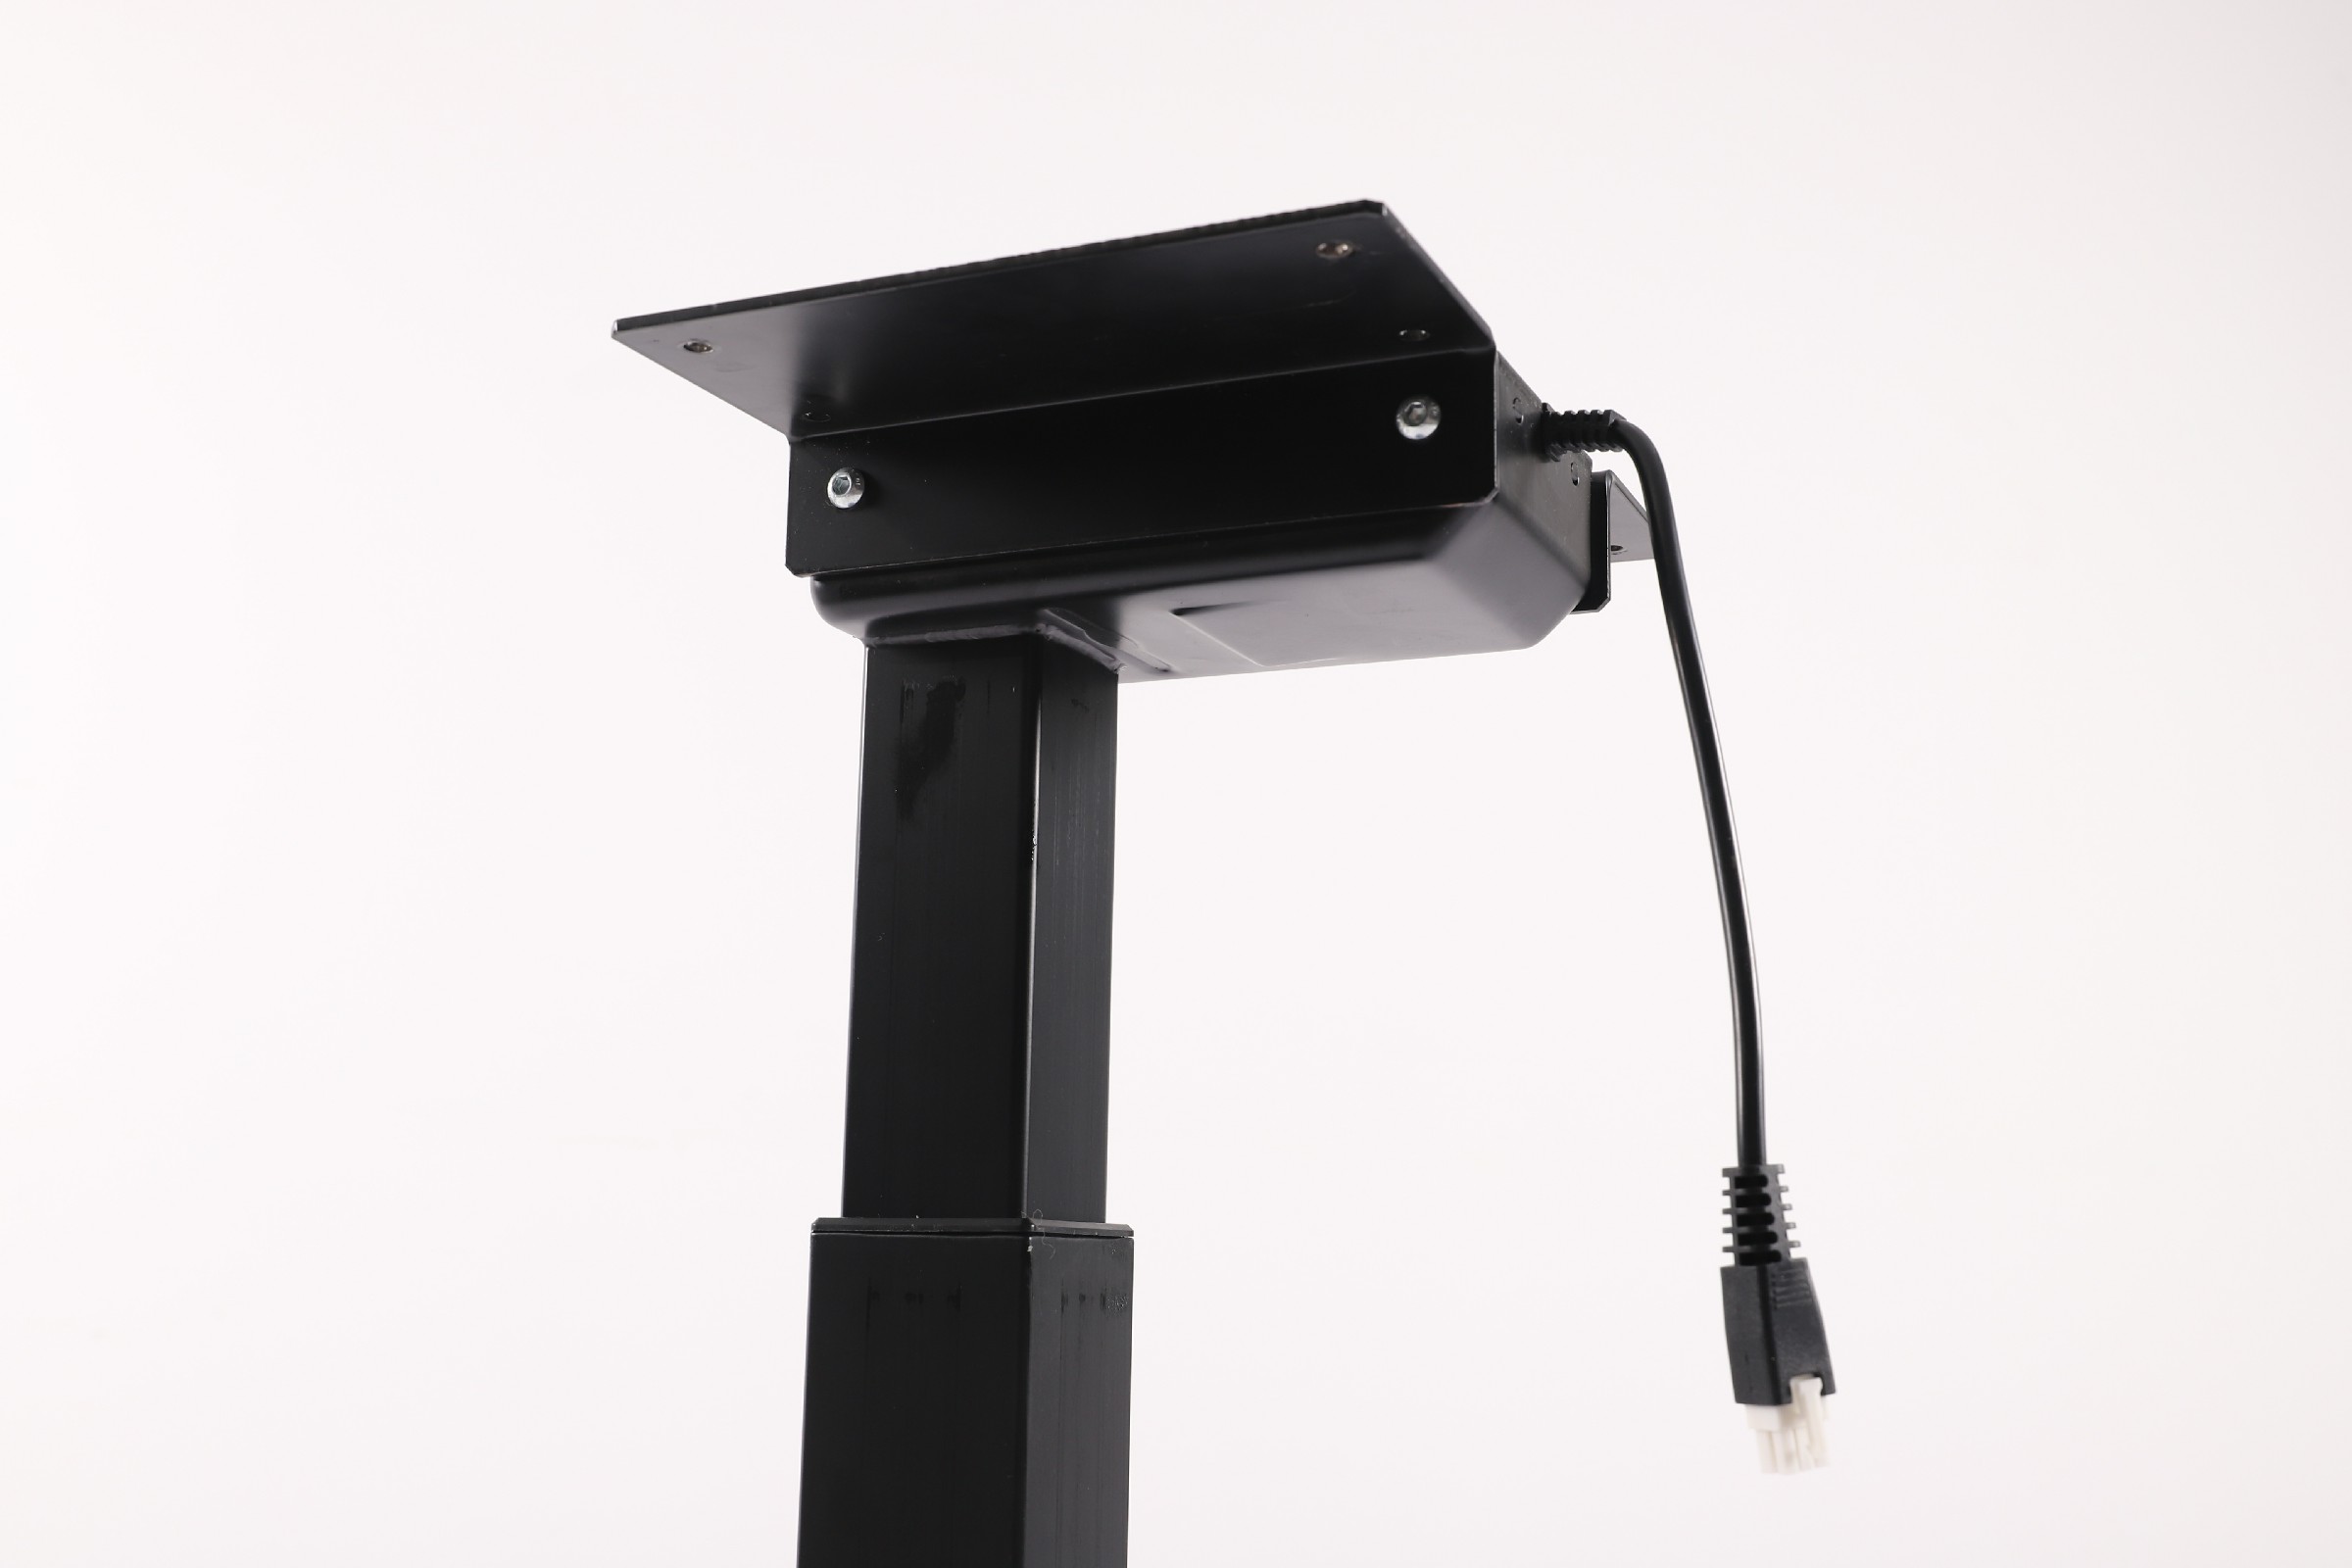 NT33-E1 Electric Height Adjustable Table Office Adjustable Desk Naite Ergonomic Laptop Desks